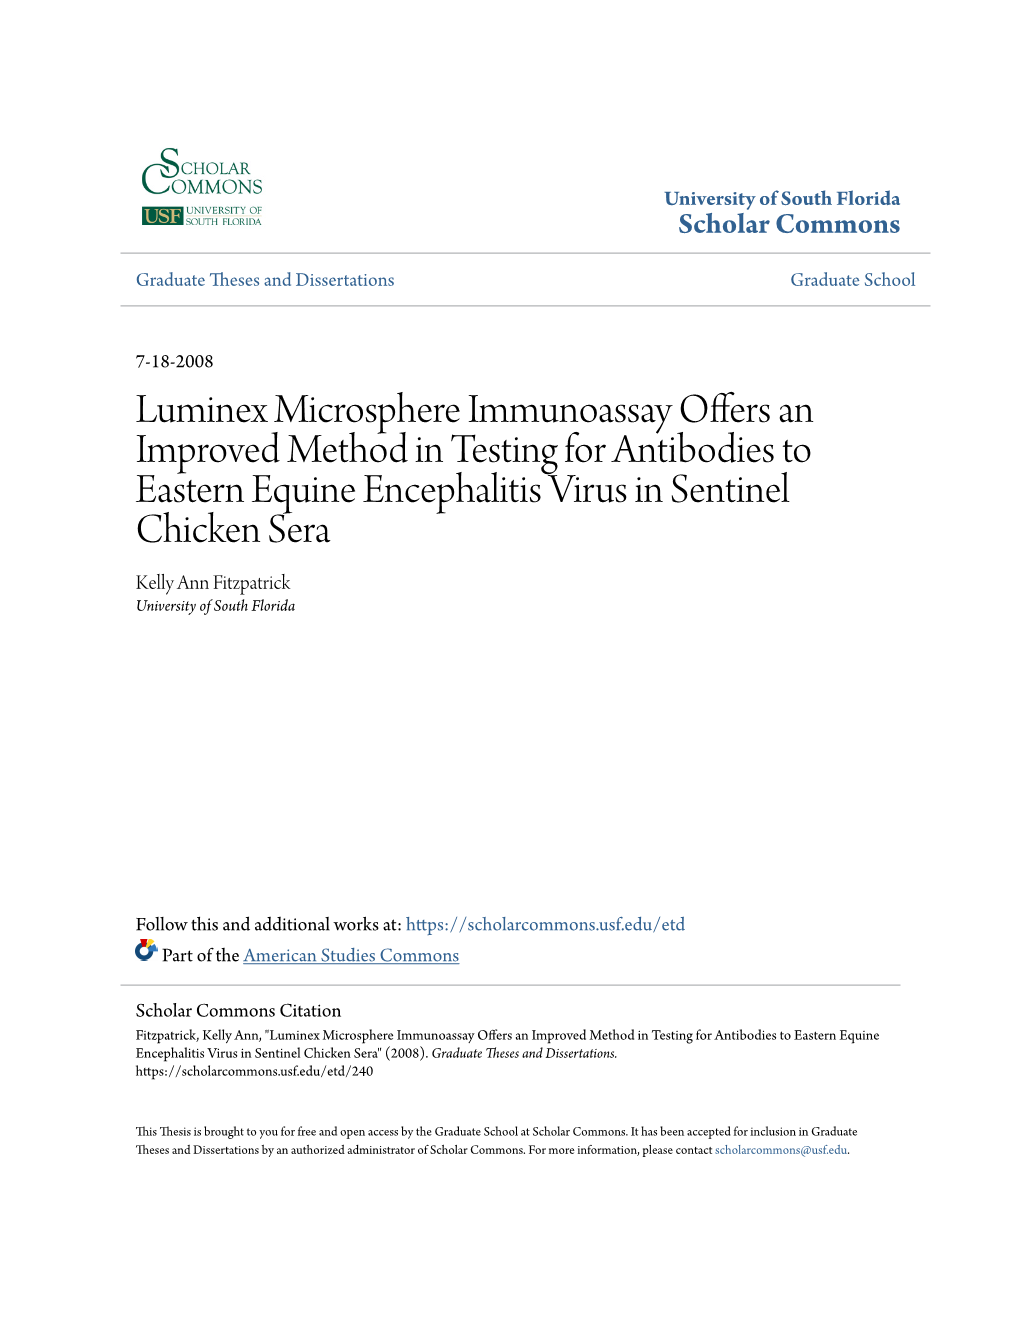 Luminex Microsphere Immunoassay Offers an Improved Method In